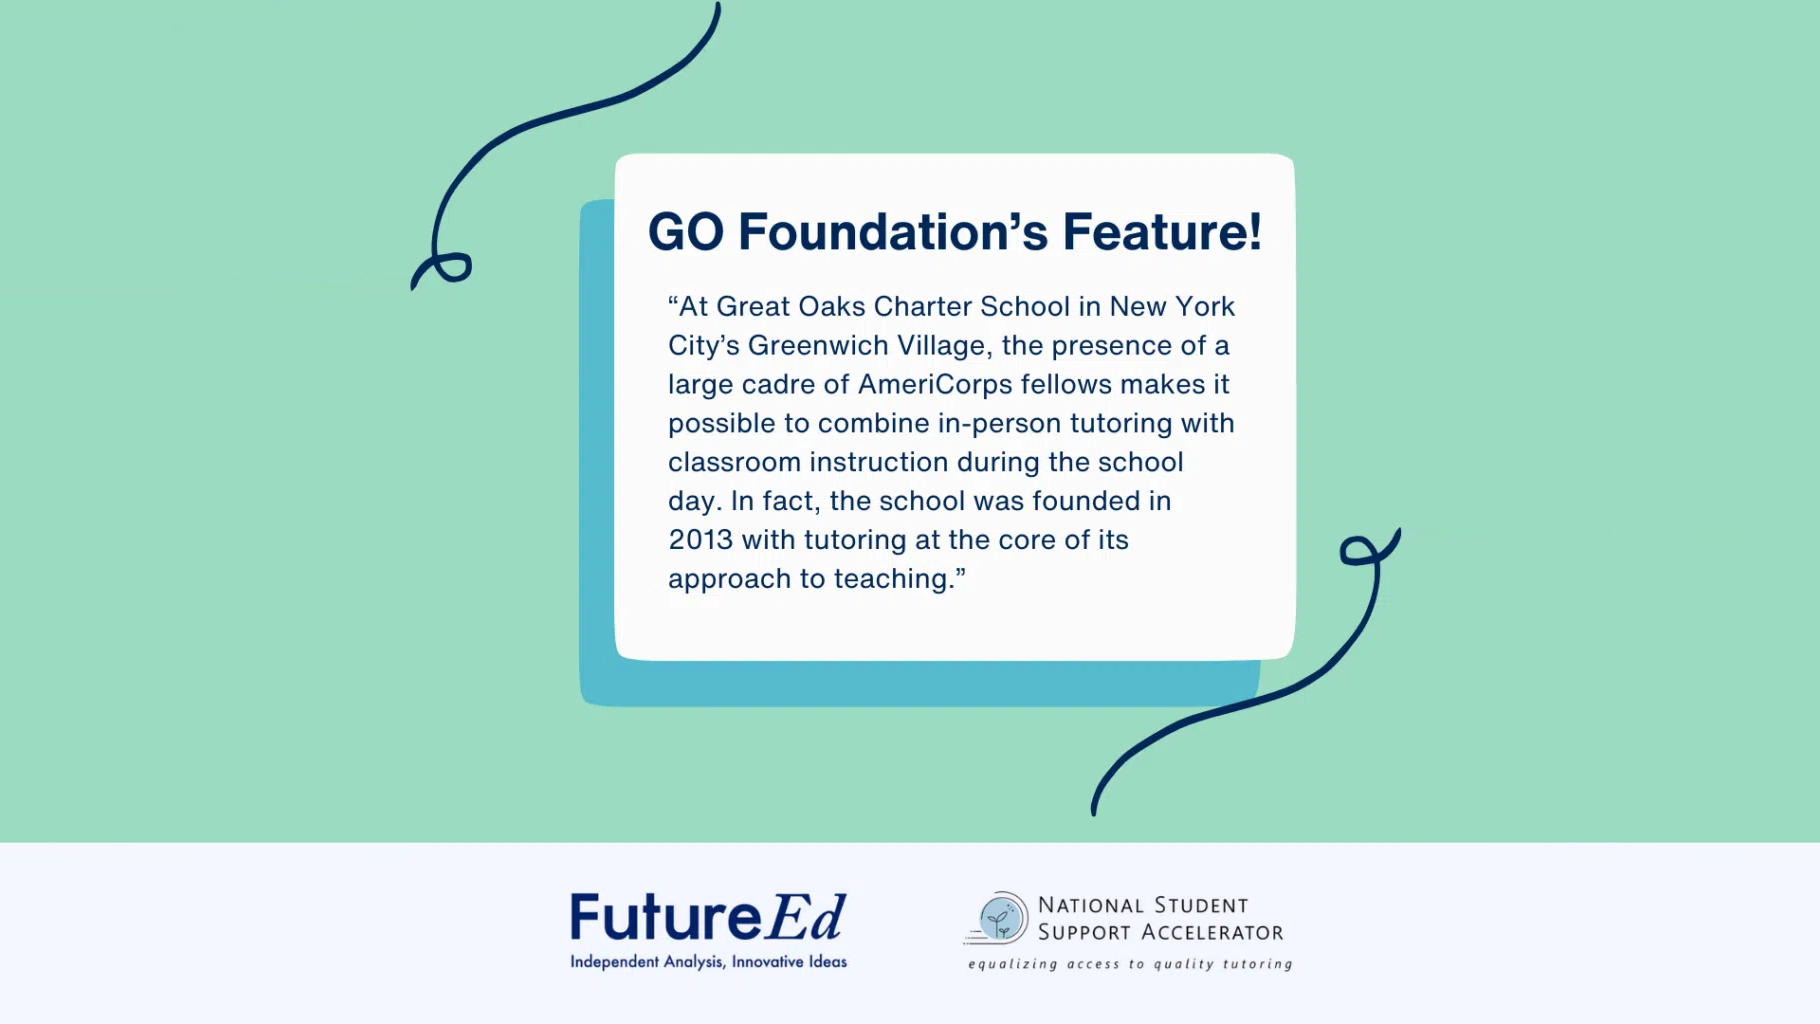 GO Foundations FutureEd